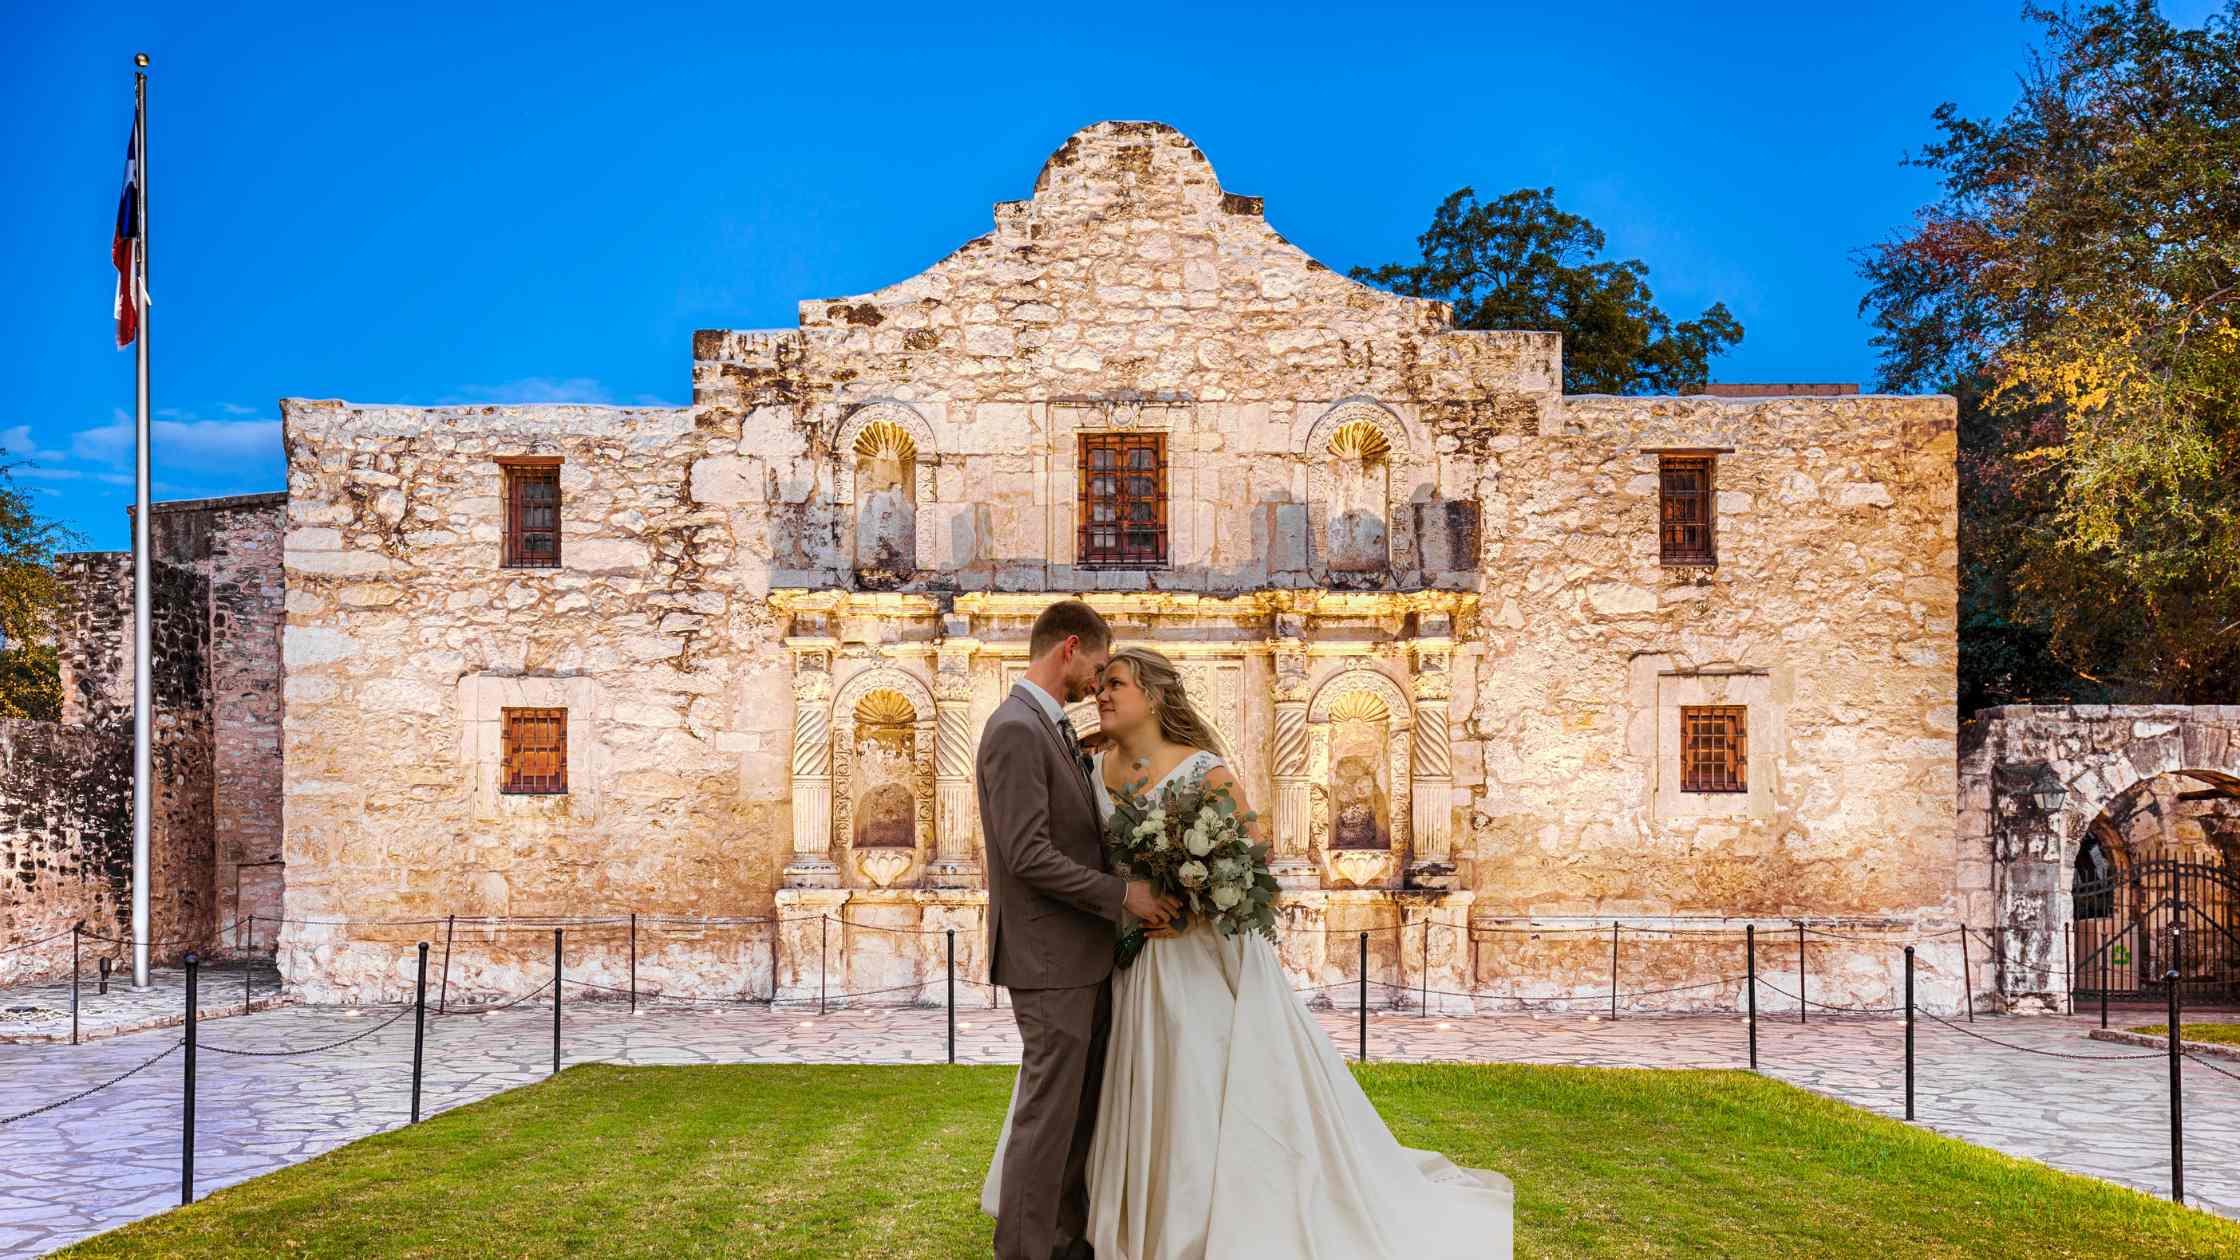 San Antonio Weddings: Where Romance Meets Southern Charm. Your Complete Wedding Planning Resource.